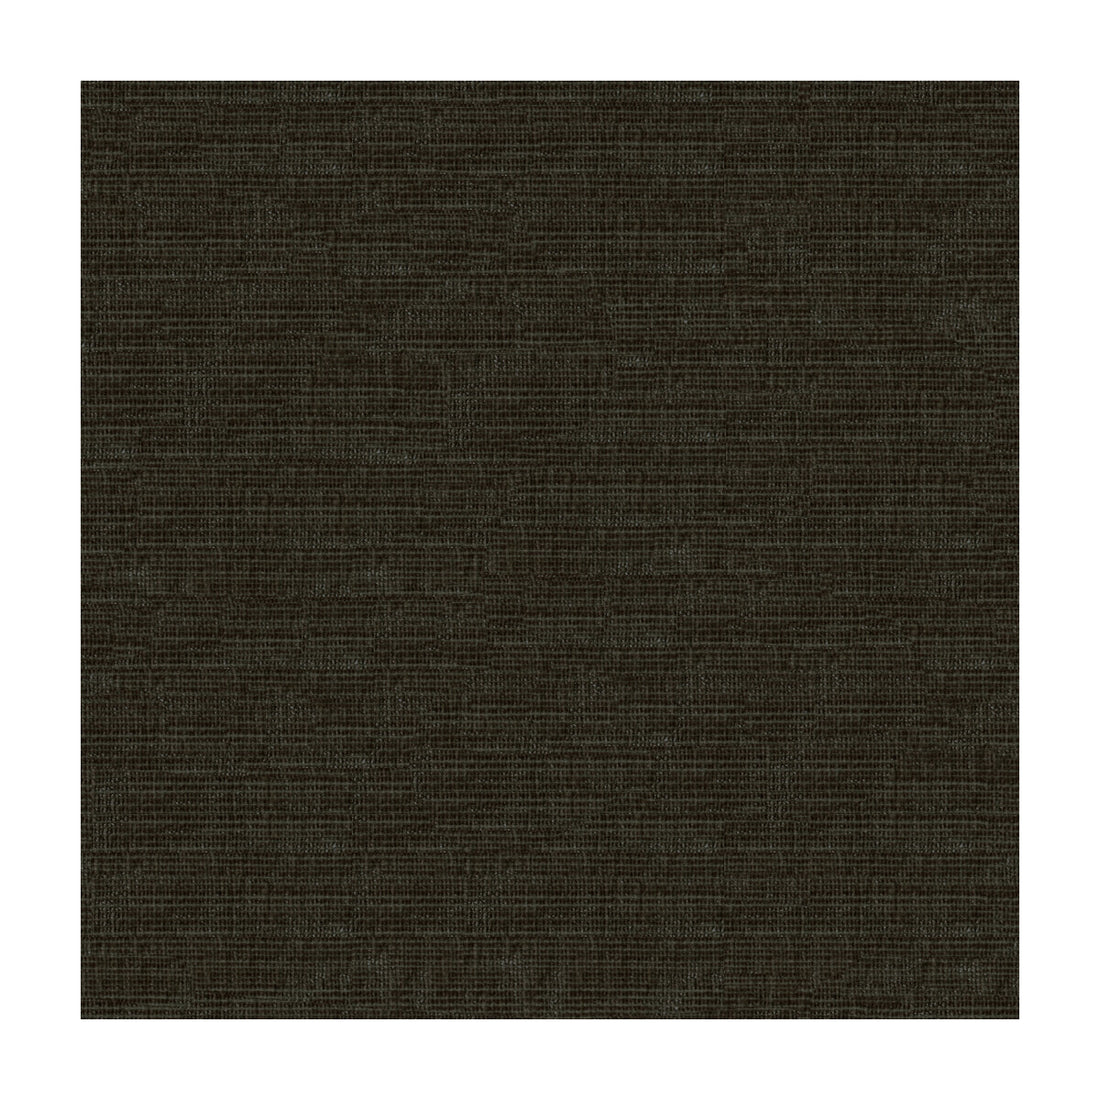 Kravet Smart fabric in 34191-8 color - pattern 34191.8.0 - by Kravet Smart